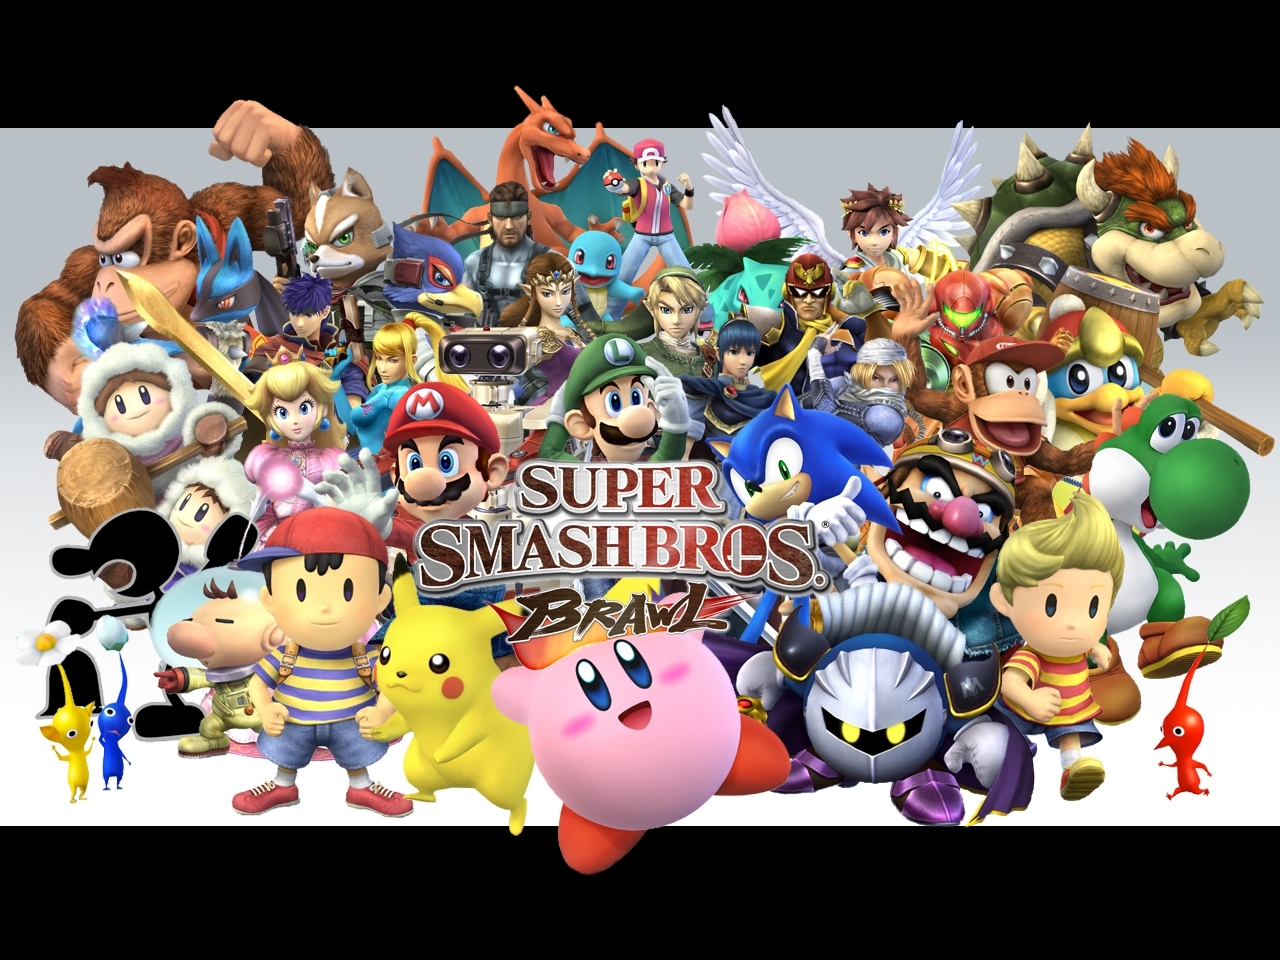 "Super Smash Bros. Brawl" desktop wallpaper (1280 x 960 pixels)